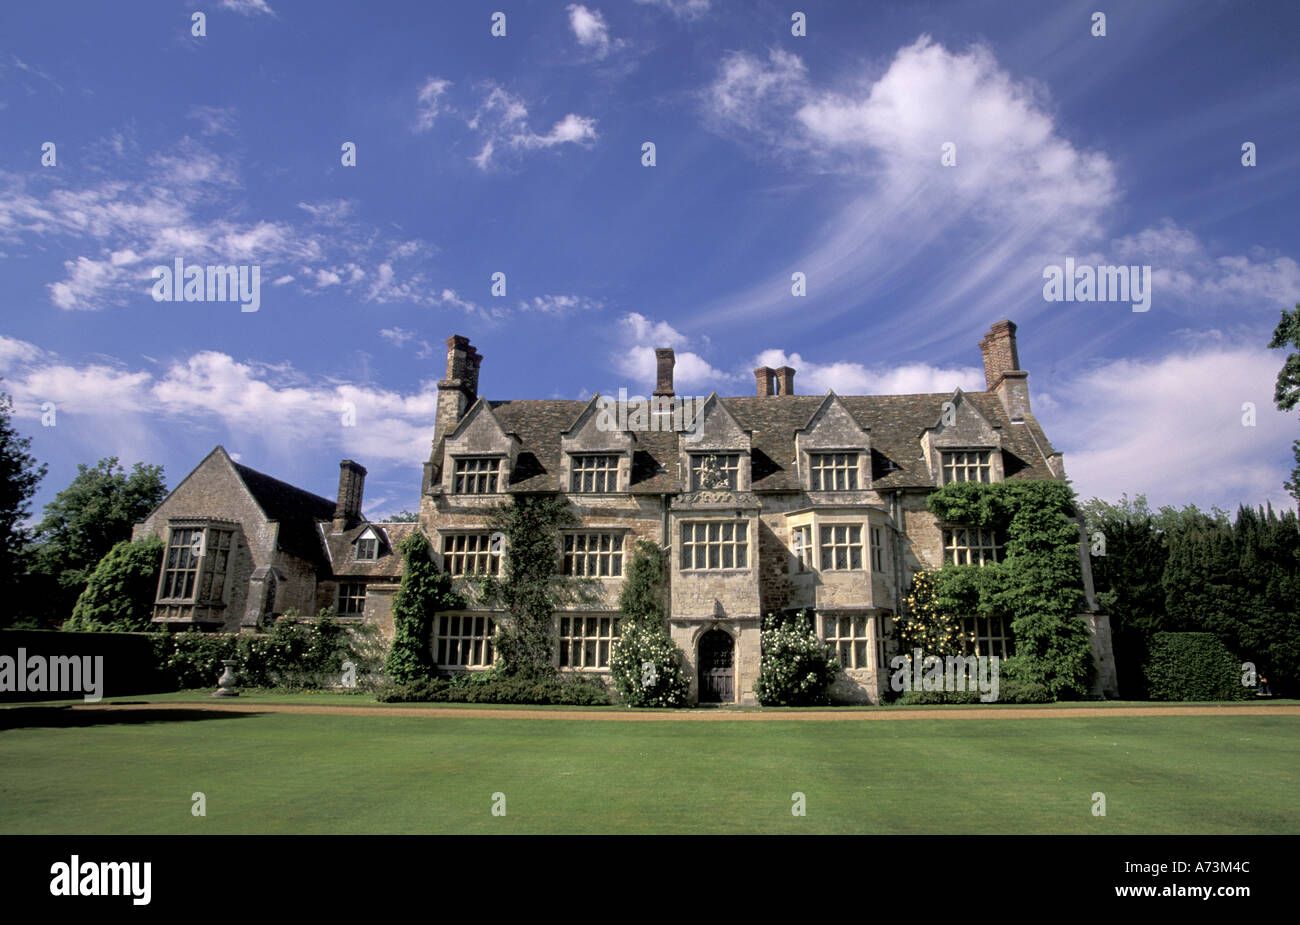 Europe, England, Cambridgeshire. Anglesby Abbey, Jacobean Style Manor Stock Photo